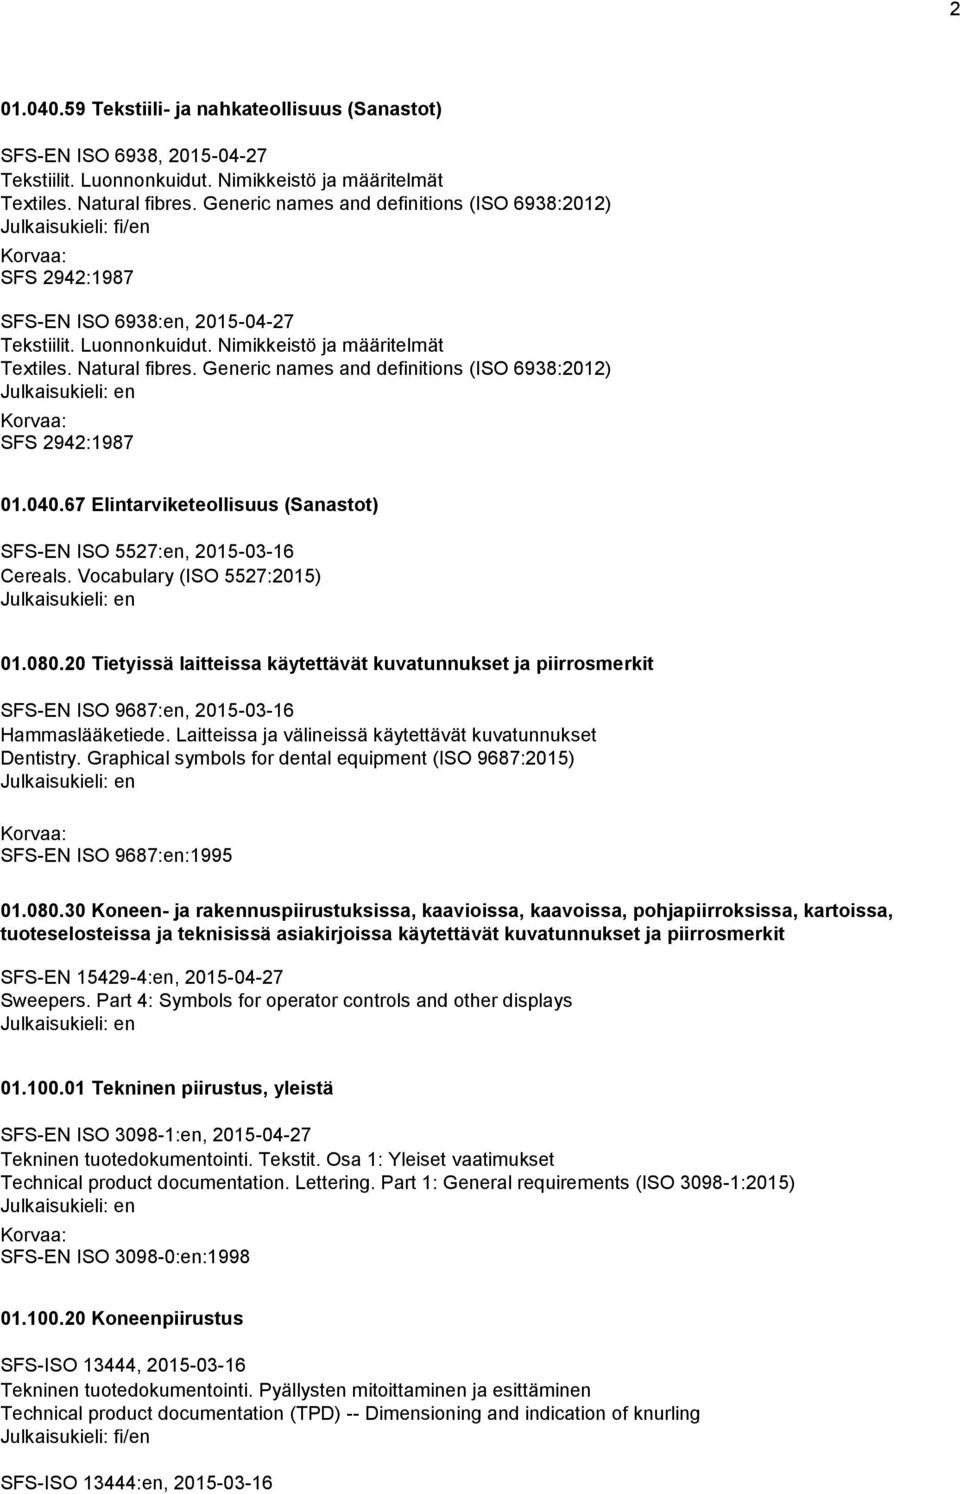 Generic names and definitions (ISO 6938:2012) SFS 2942:1987 01.040.67 Elintarviketeollisuus (Sanastot) SFS-EN ISO 5527:en, 2015-03-16 Cereals. Vocabulary (ISO 5527:2015) 01.080.